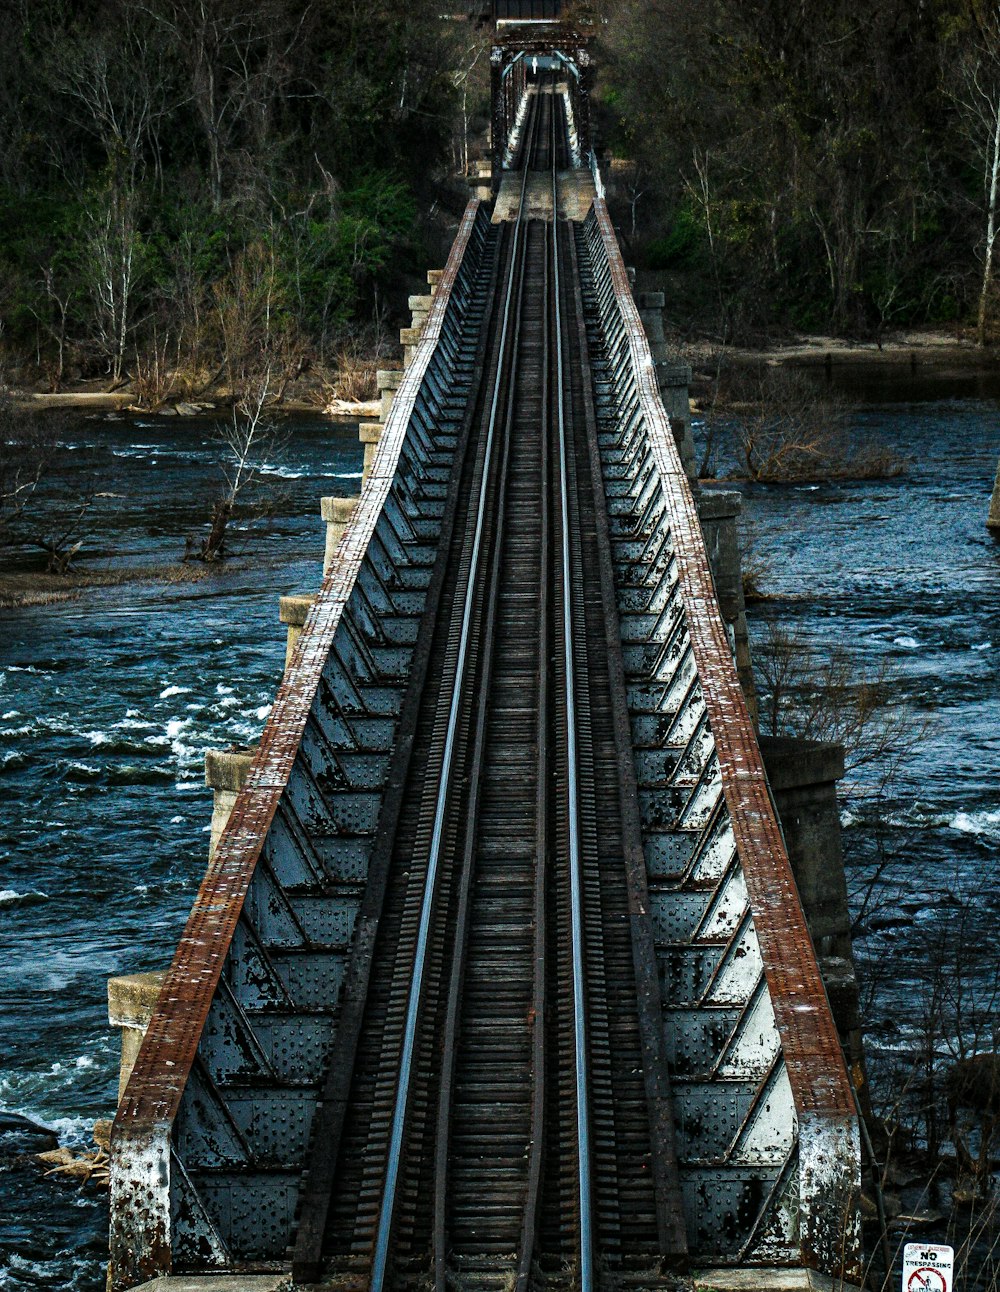 gray metal train rail near body of water during daytime